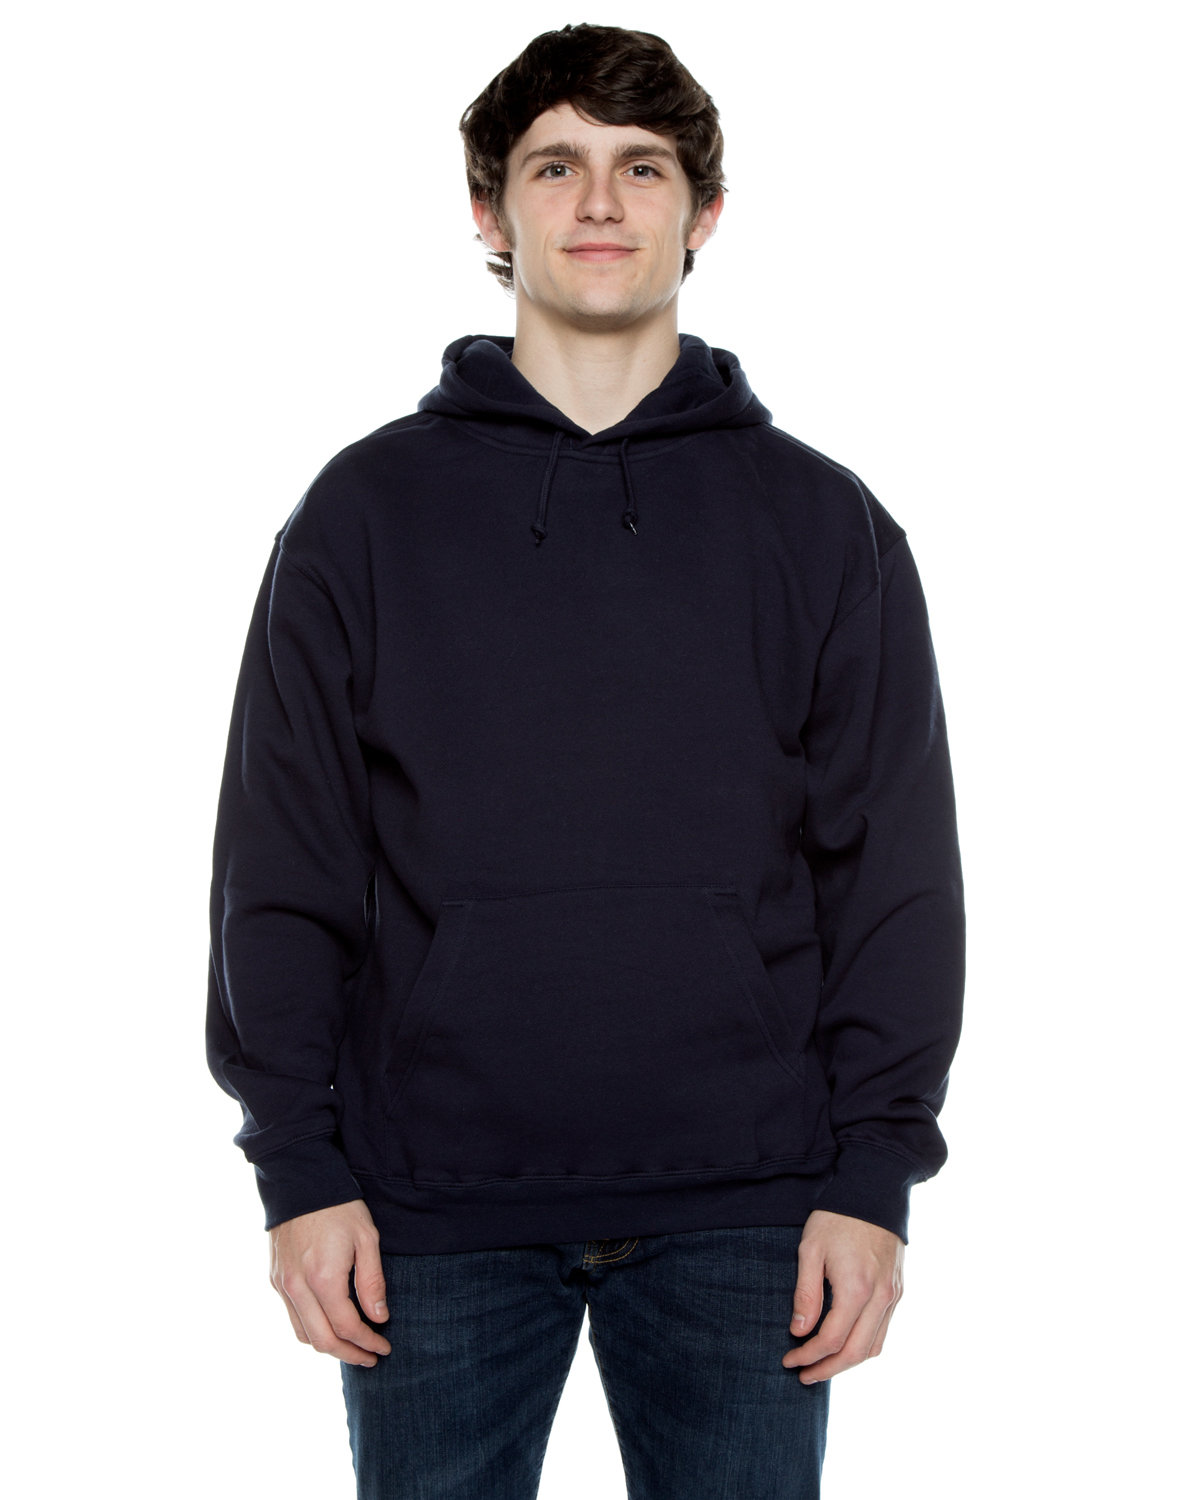 Beimar Drop Ship Unisex 10 oz. 80/20 Cotton/Poly Exclusive Hooded Sweatshirt DEEP NAVY 